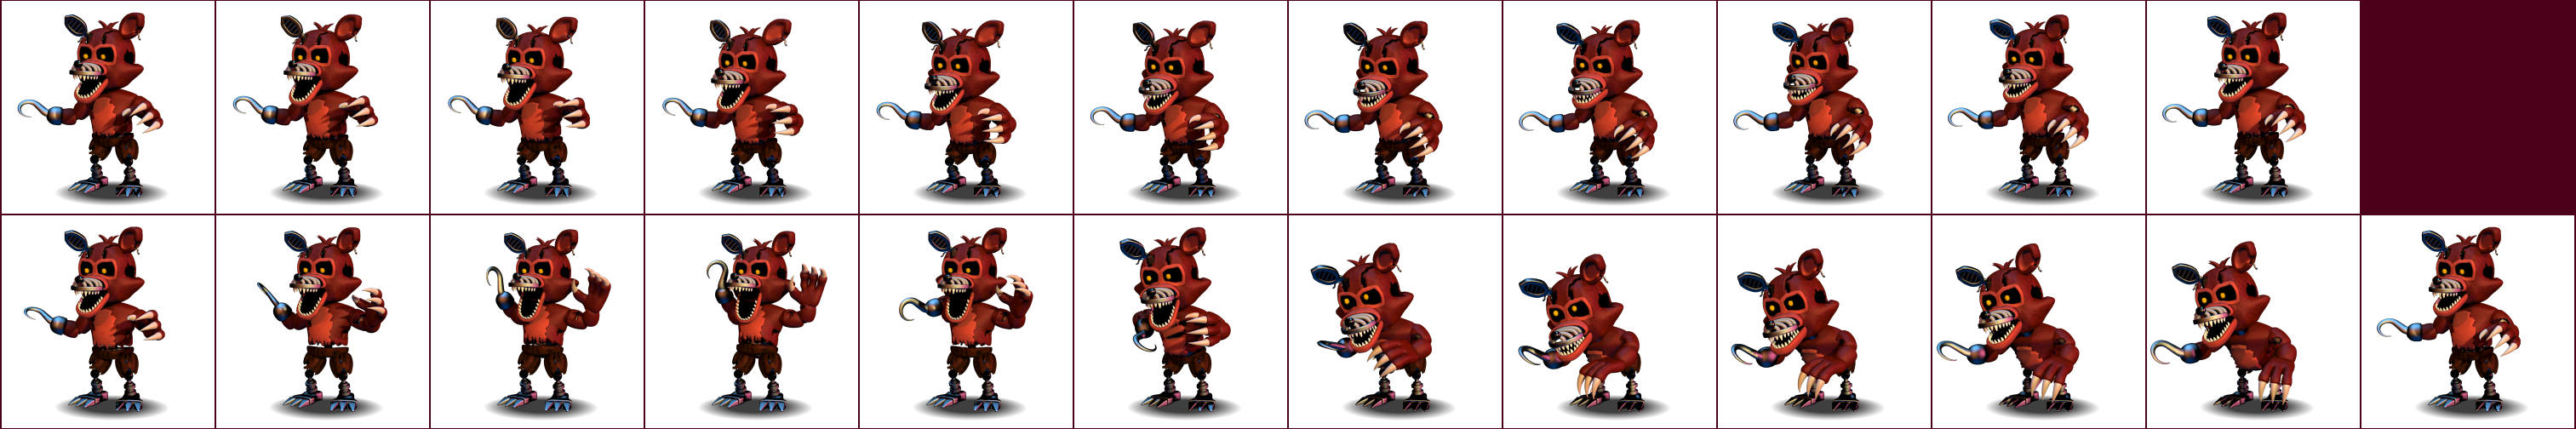 FNaF World - Nightmare Foxy